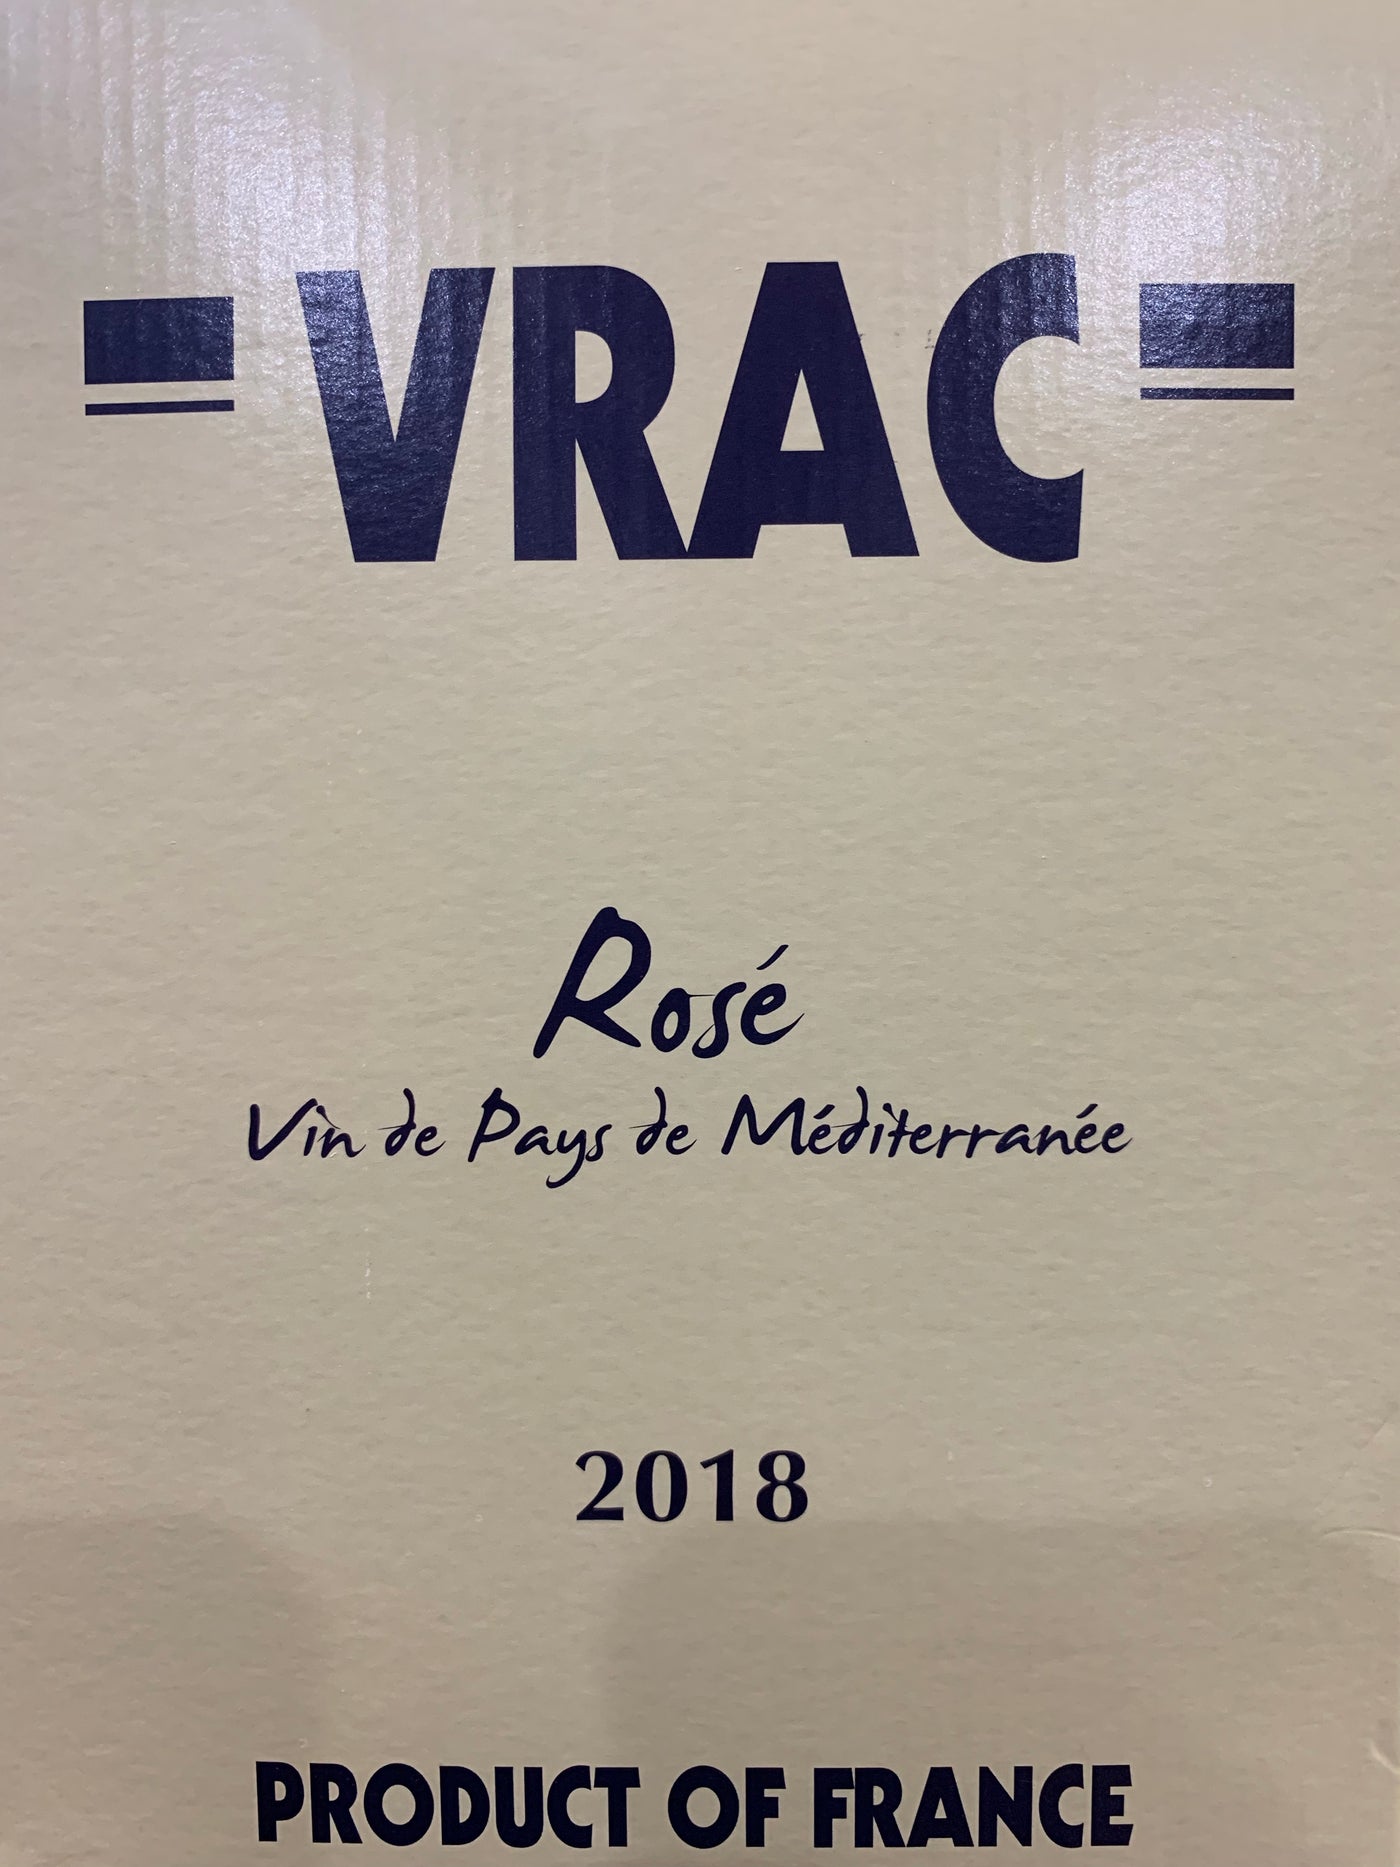 VRA ROSE 2019 - Bk Wine Depot Corp